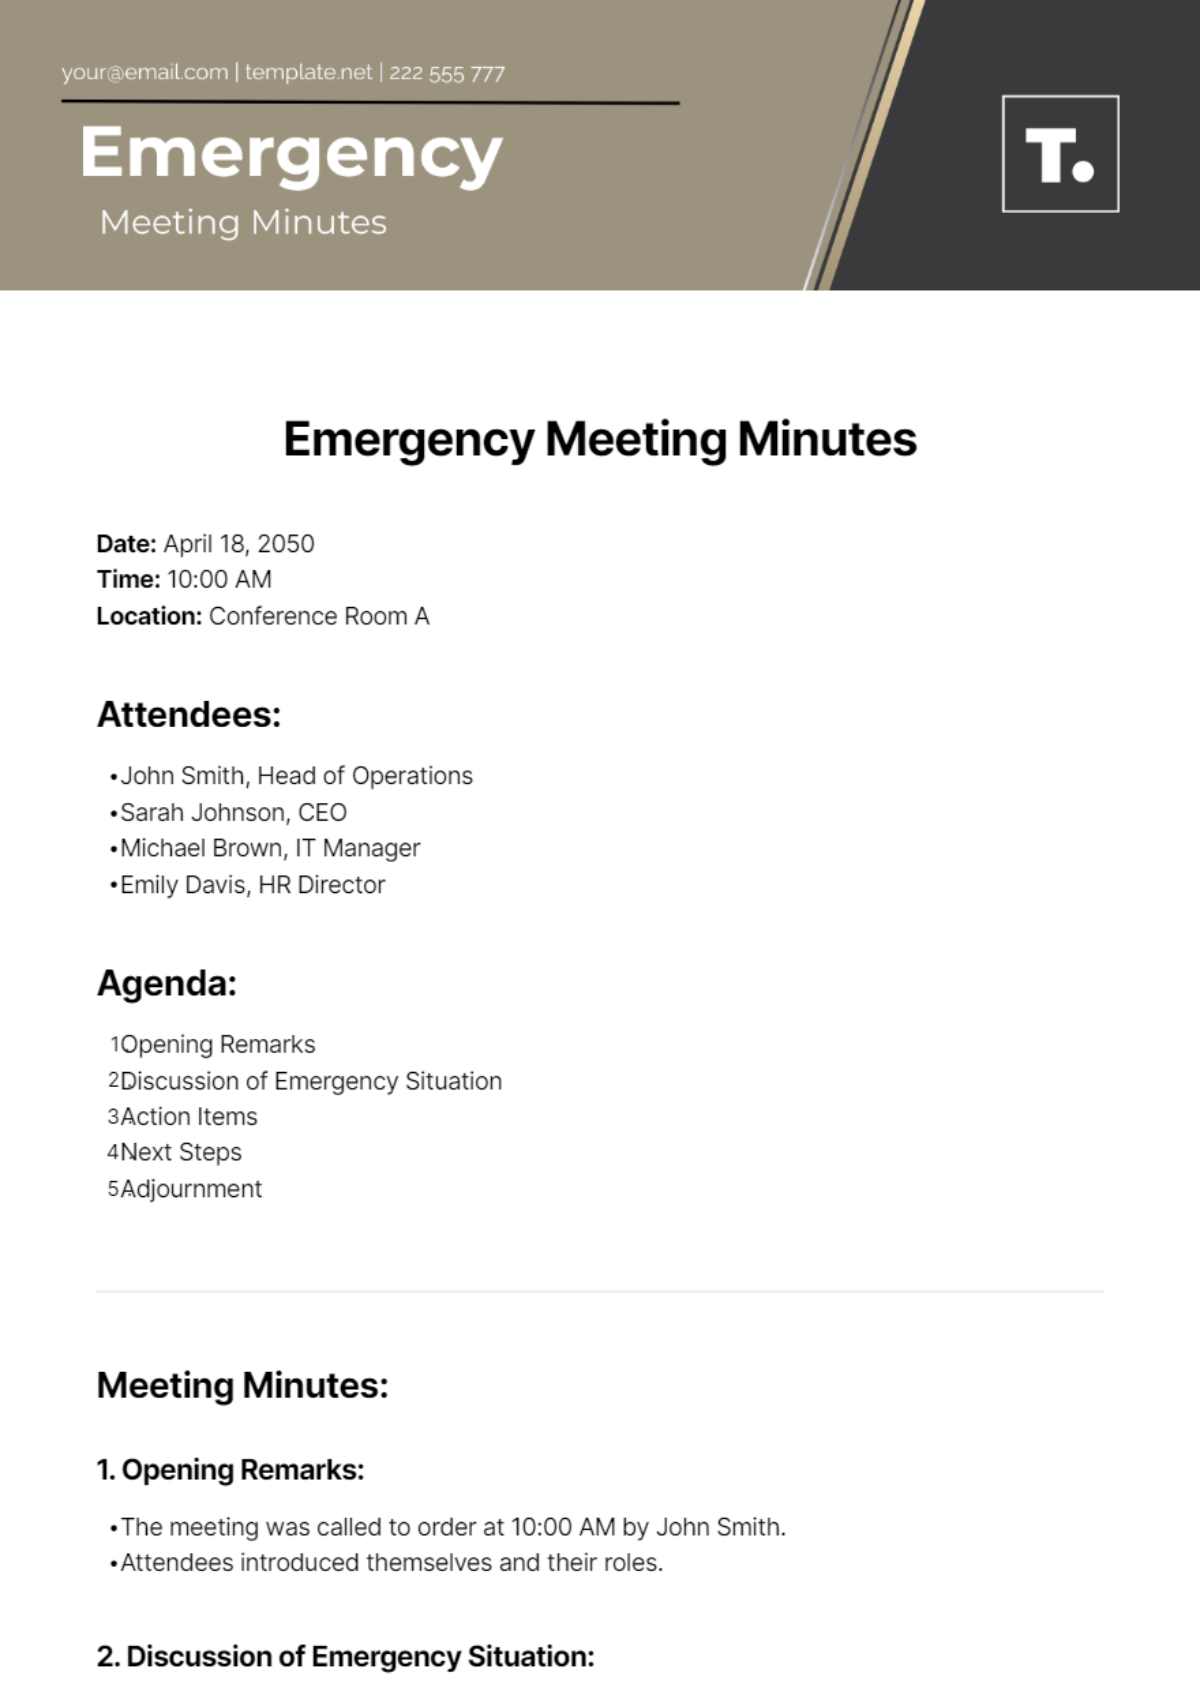 Emergency Meeting Minutes Template